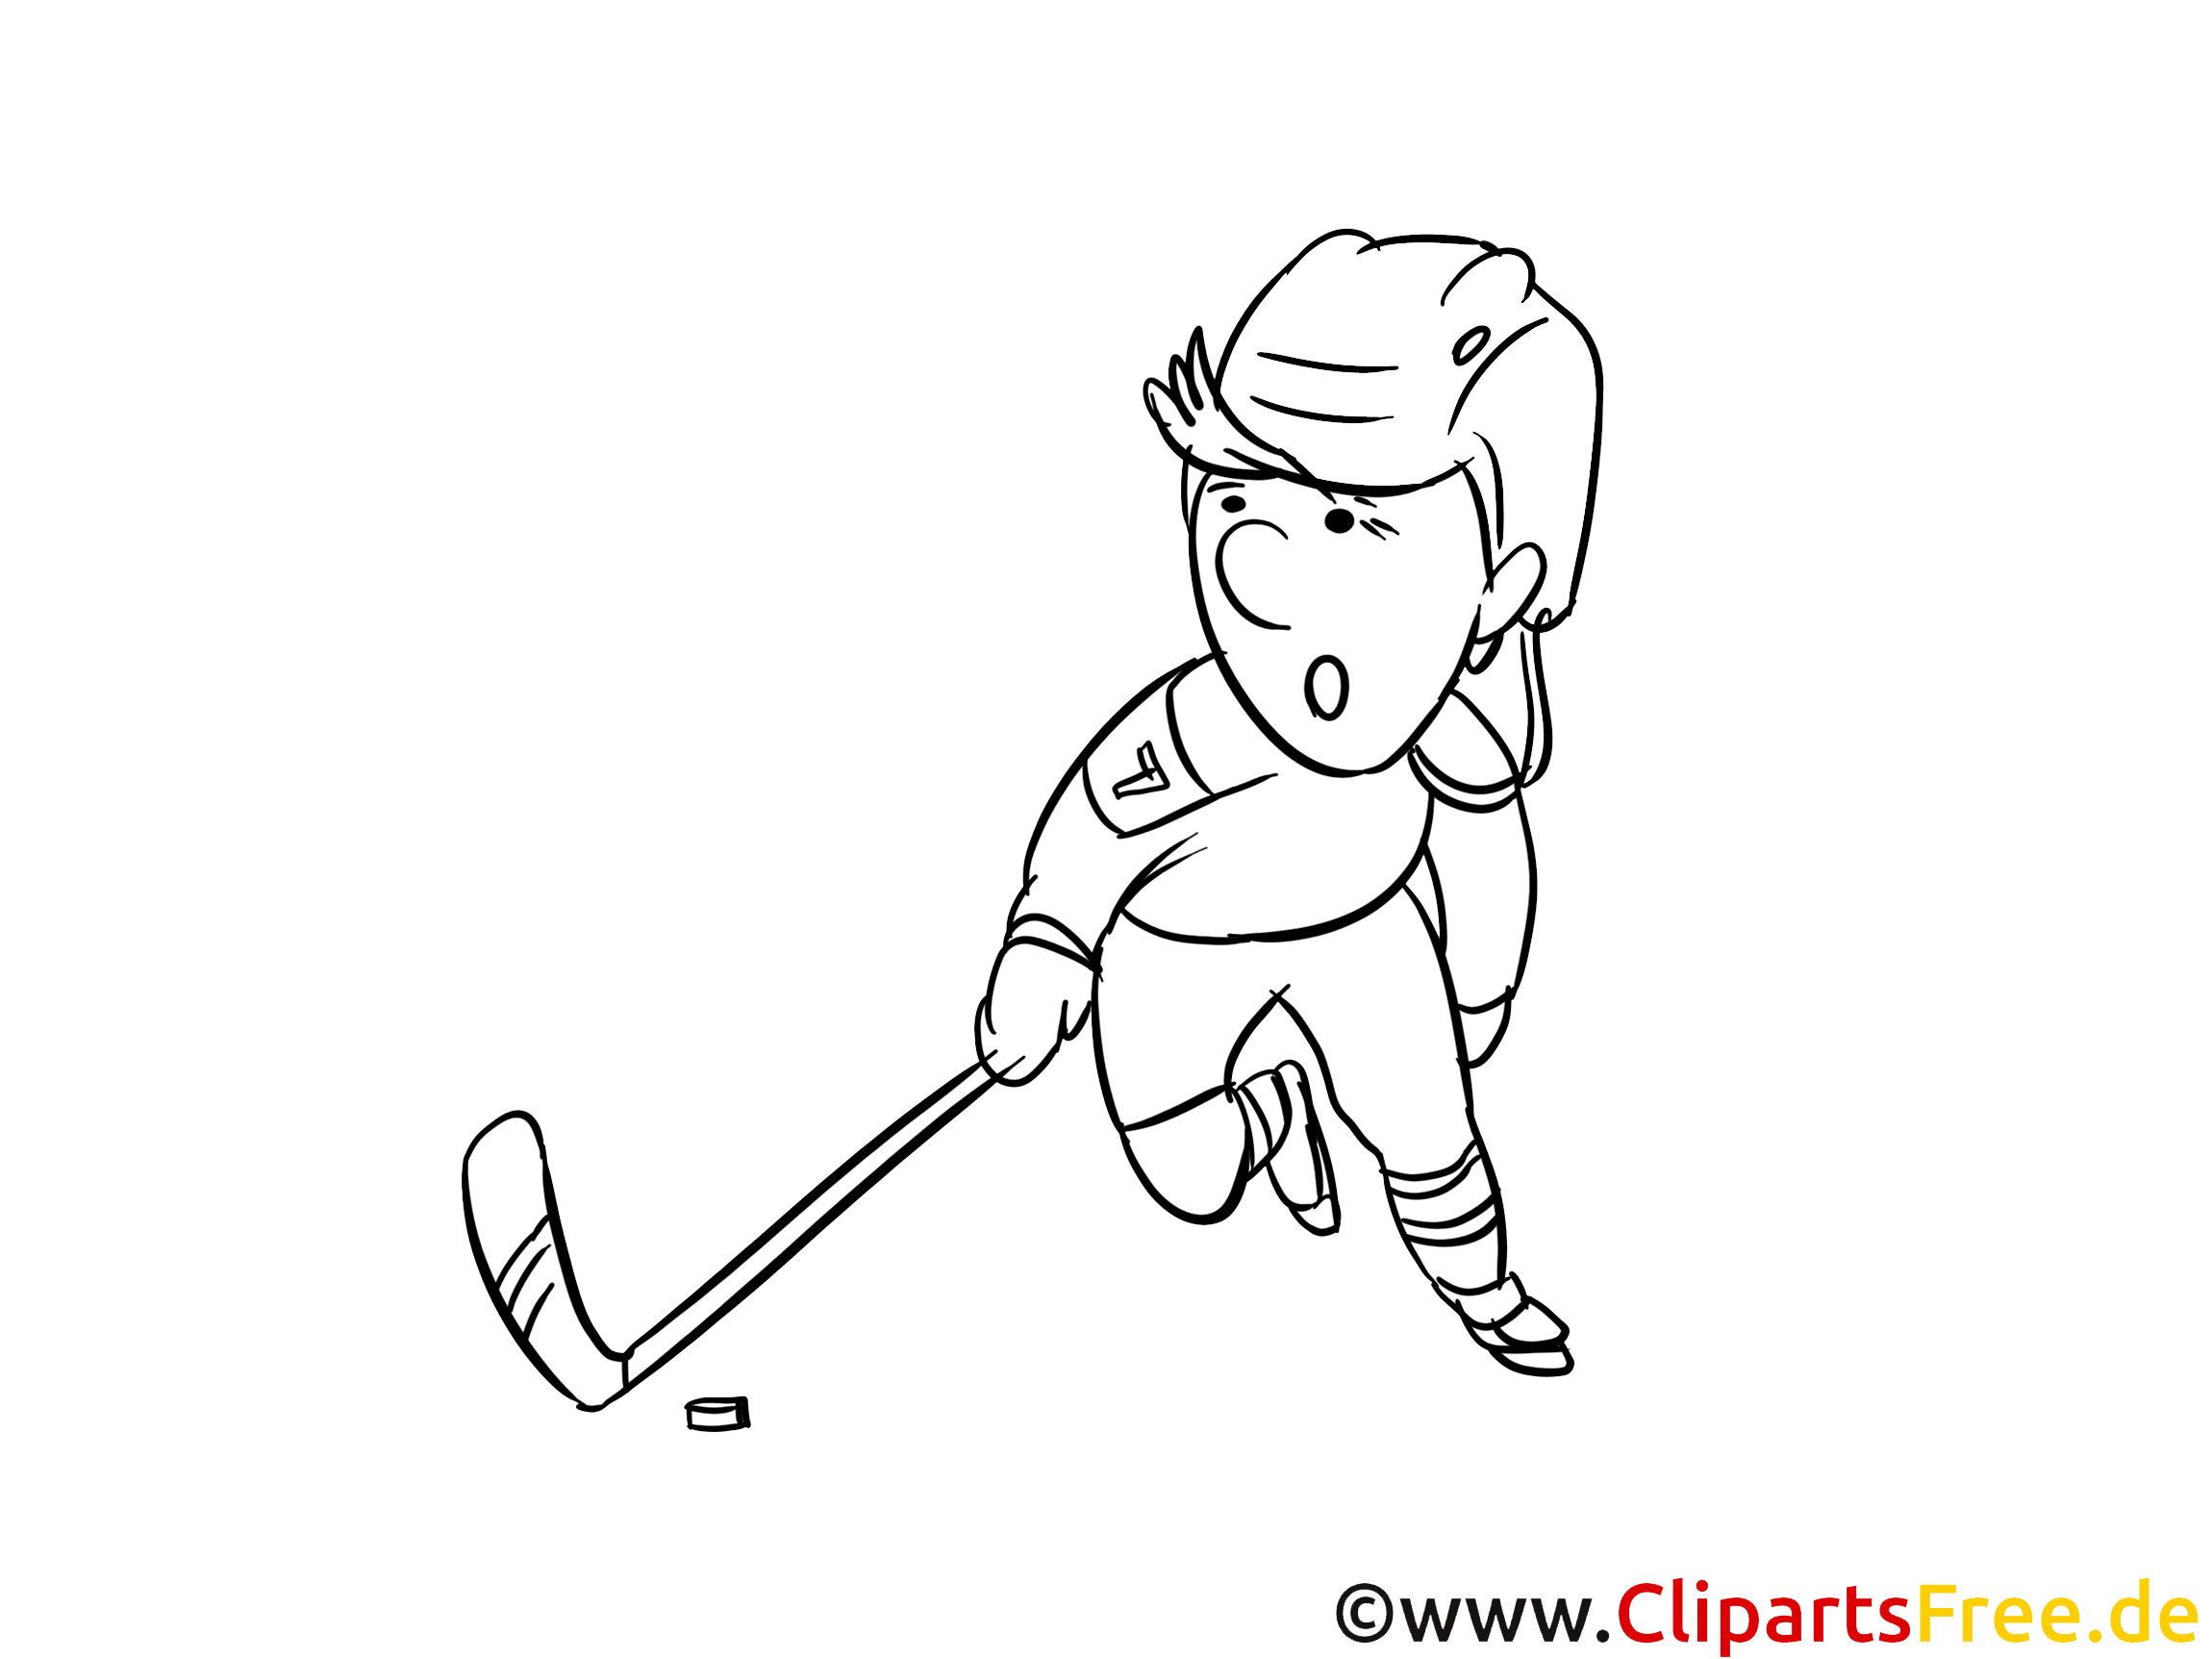 Hiver image – Coloriage hockey illustration